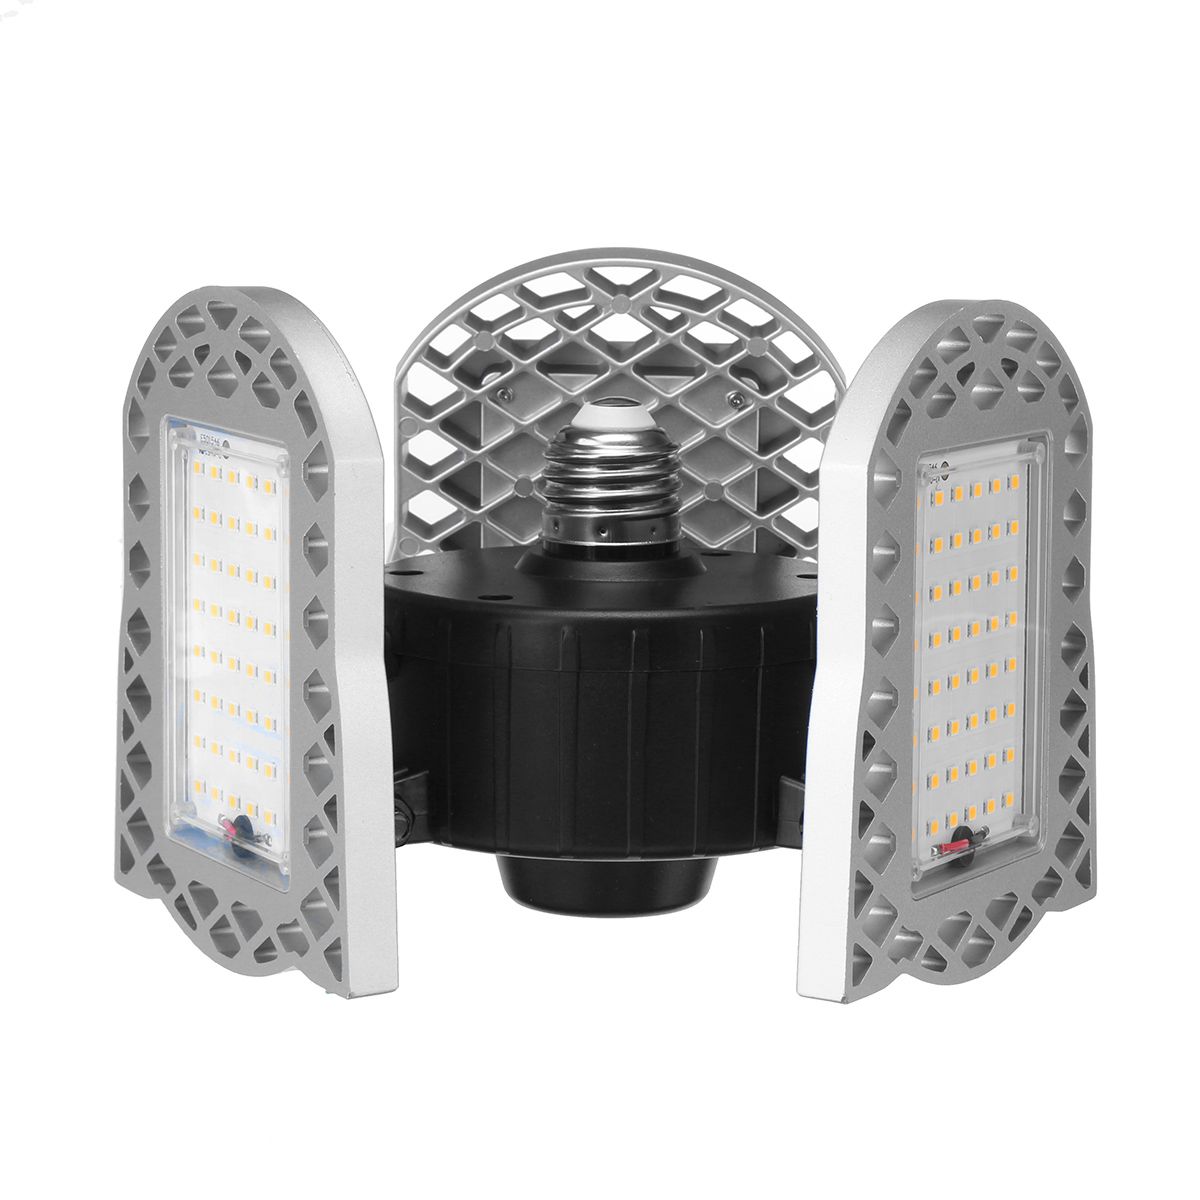 60W-LED-Garage-E27-Light-Bulb-Deformable-Ceiling-Fixture-Lights-Shop-Workshop-Lamp-1704752